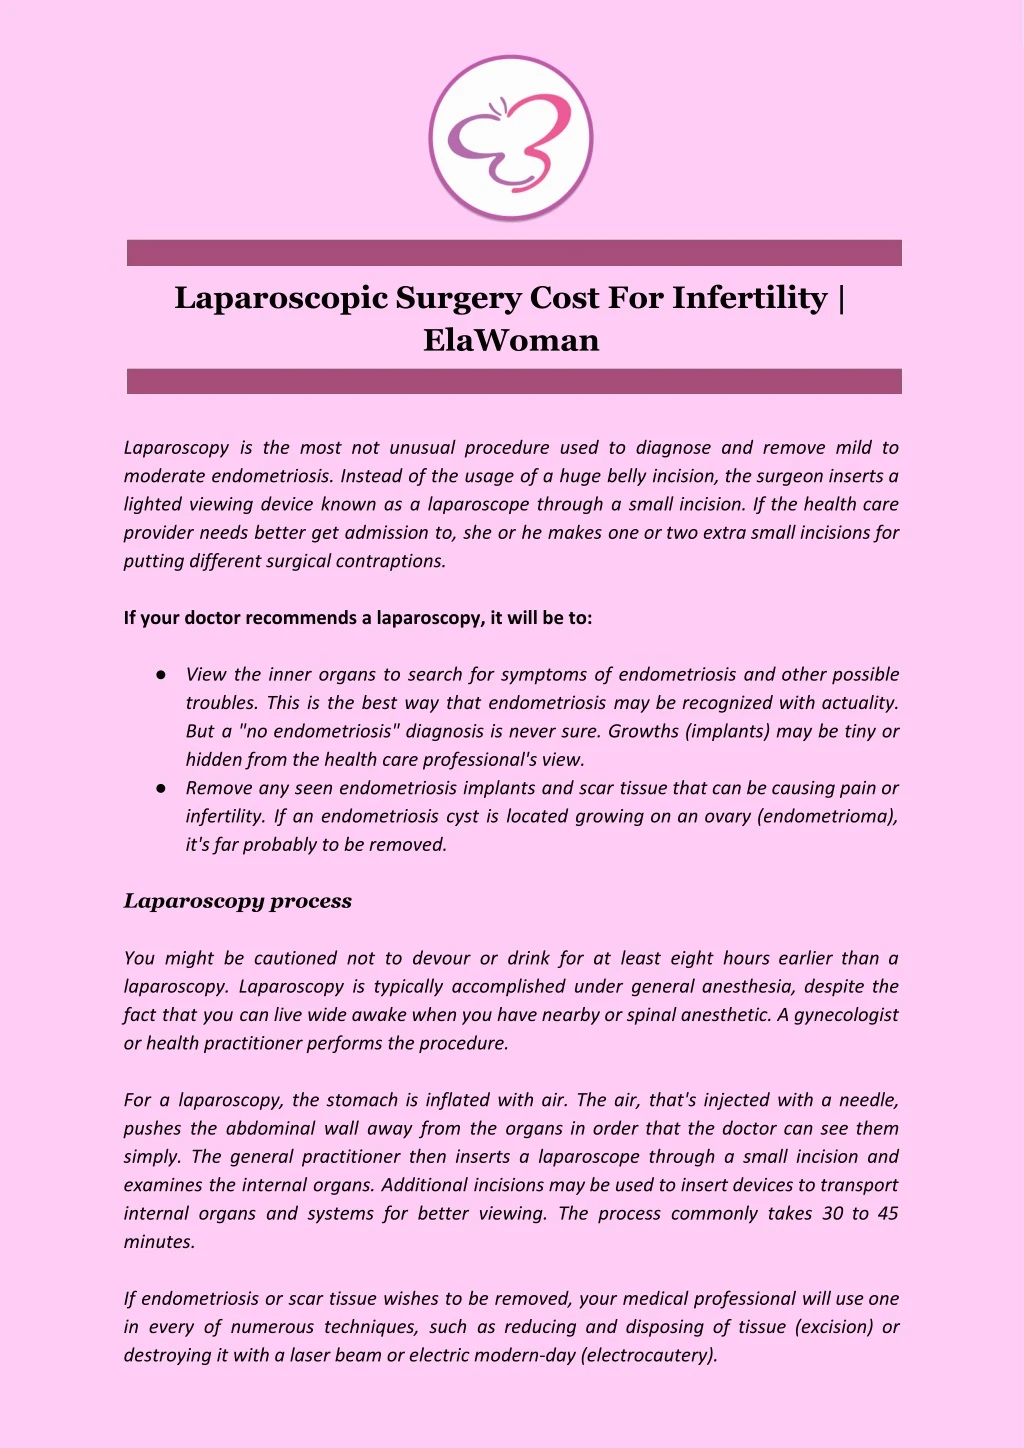 laparoscopic surgery cost for infertility elawoman